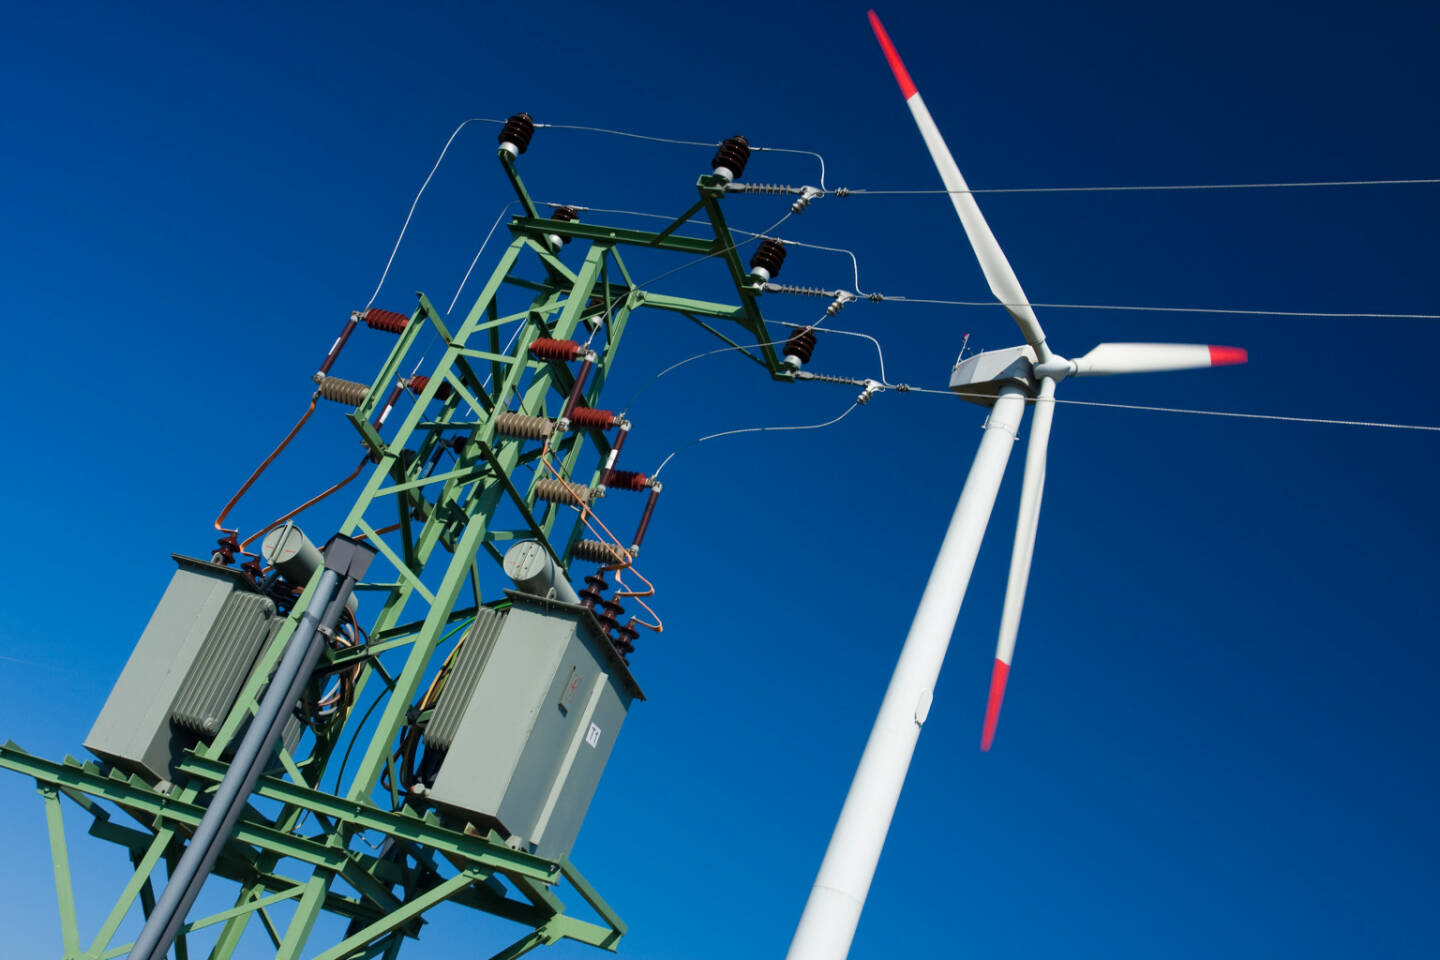 Windkraft, Windrad, Strom, http://www.shutterstock.com/de/pic-42175699/stock-photo-photo-of-wind-power-installation-in-sunny-day.html